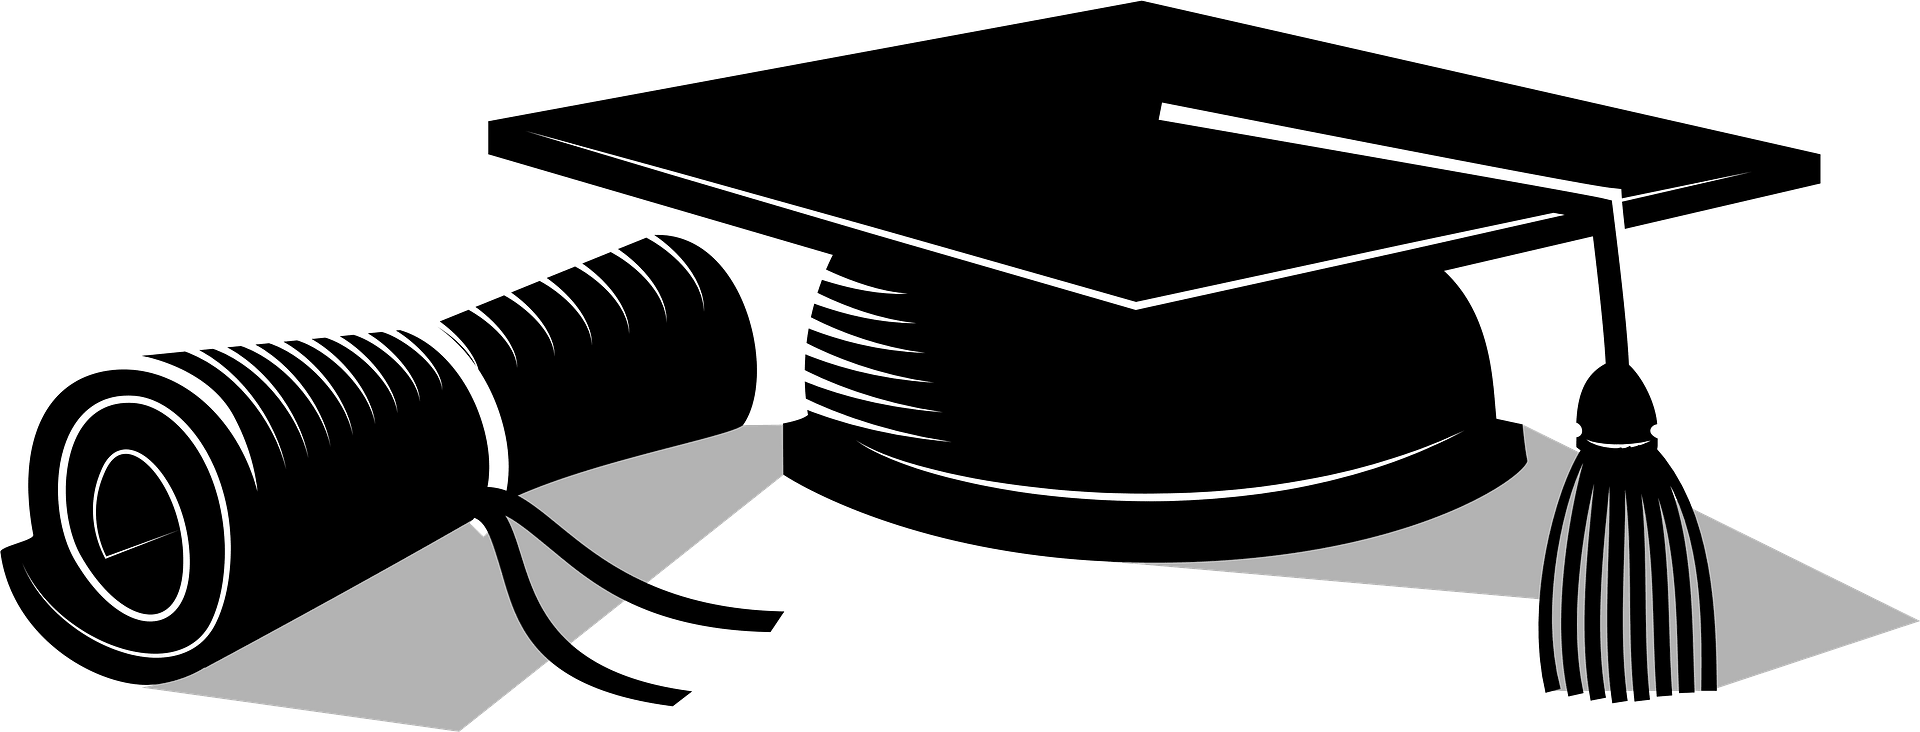 Graduation Diploma 02 Clip Art - Clip Art Library